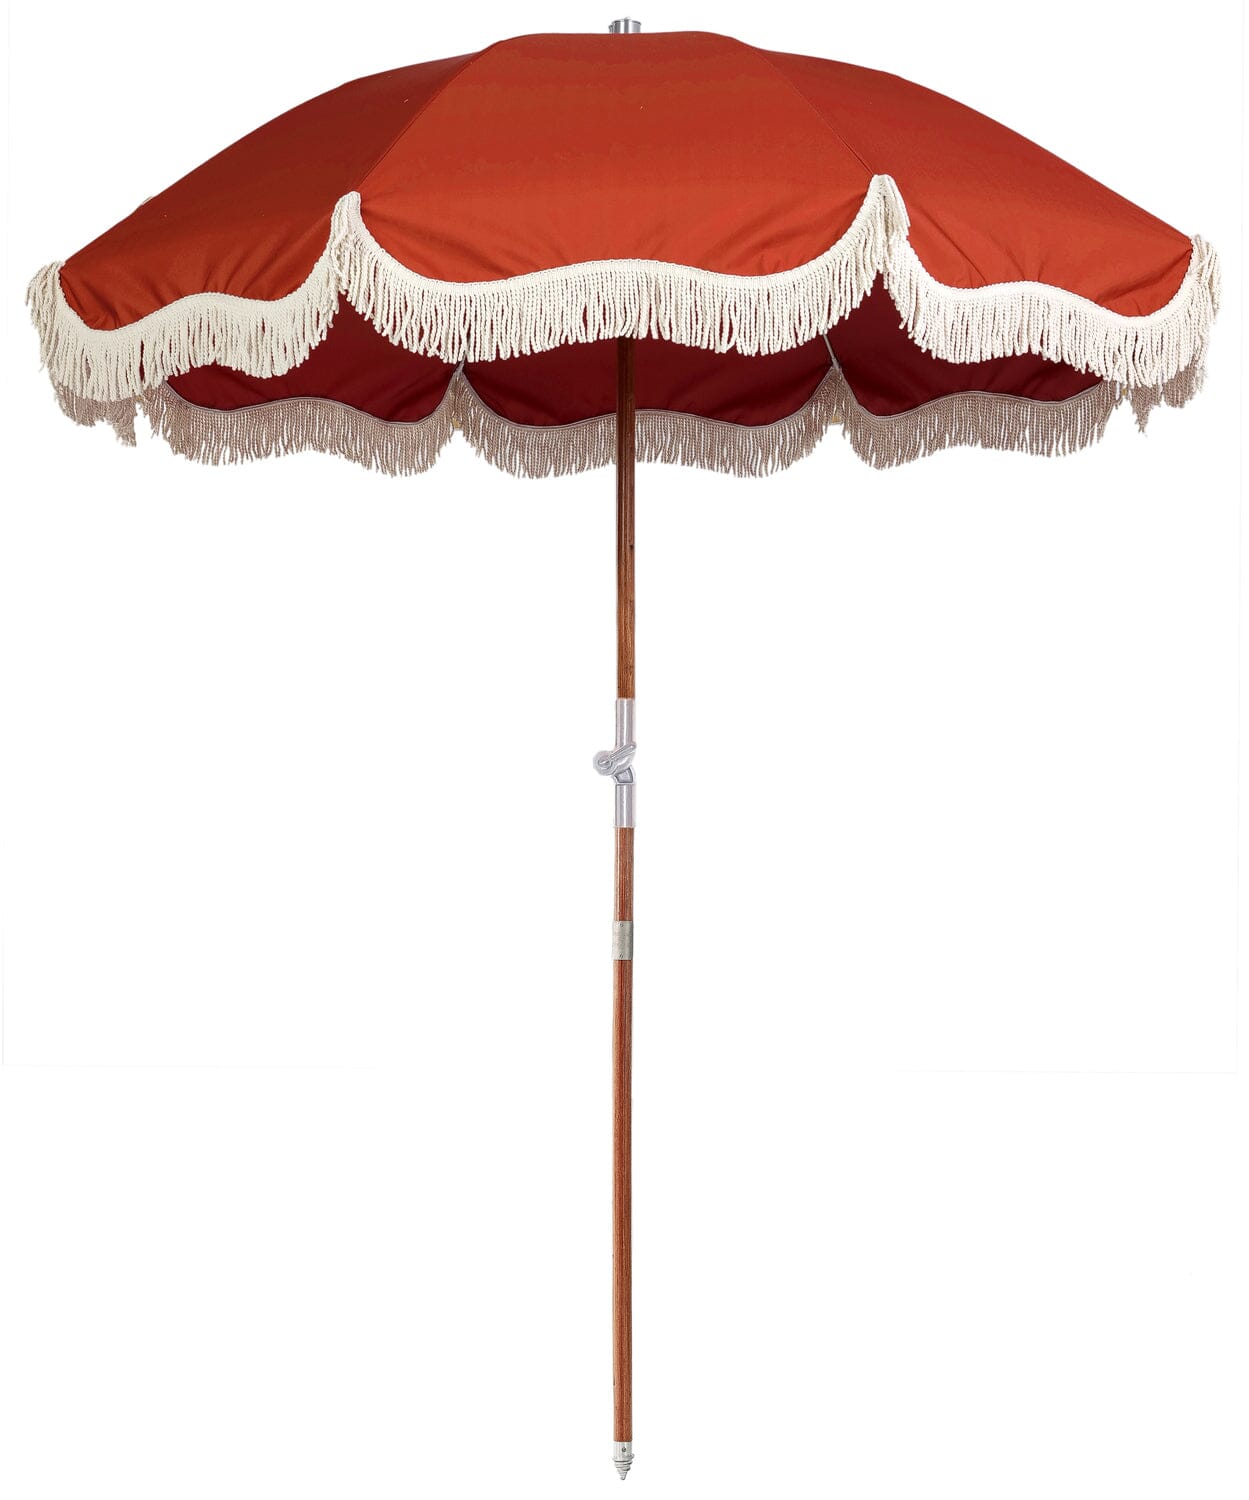 The Premium Beach Umbrella - Le Sirenuse